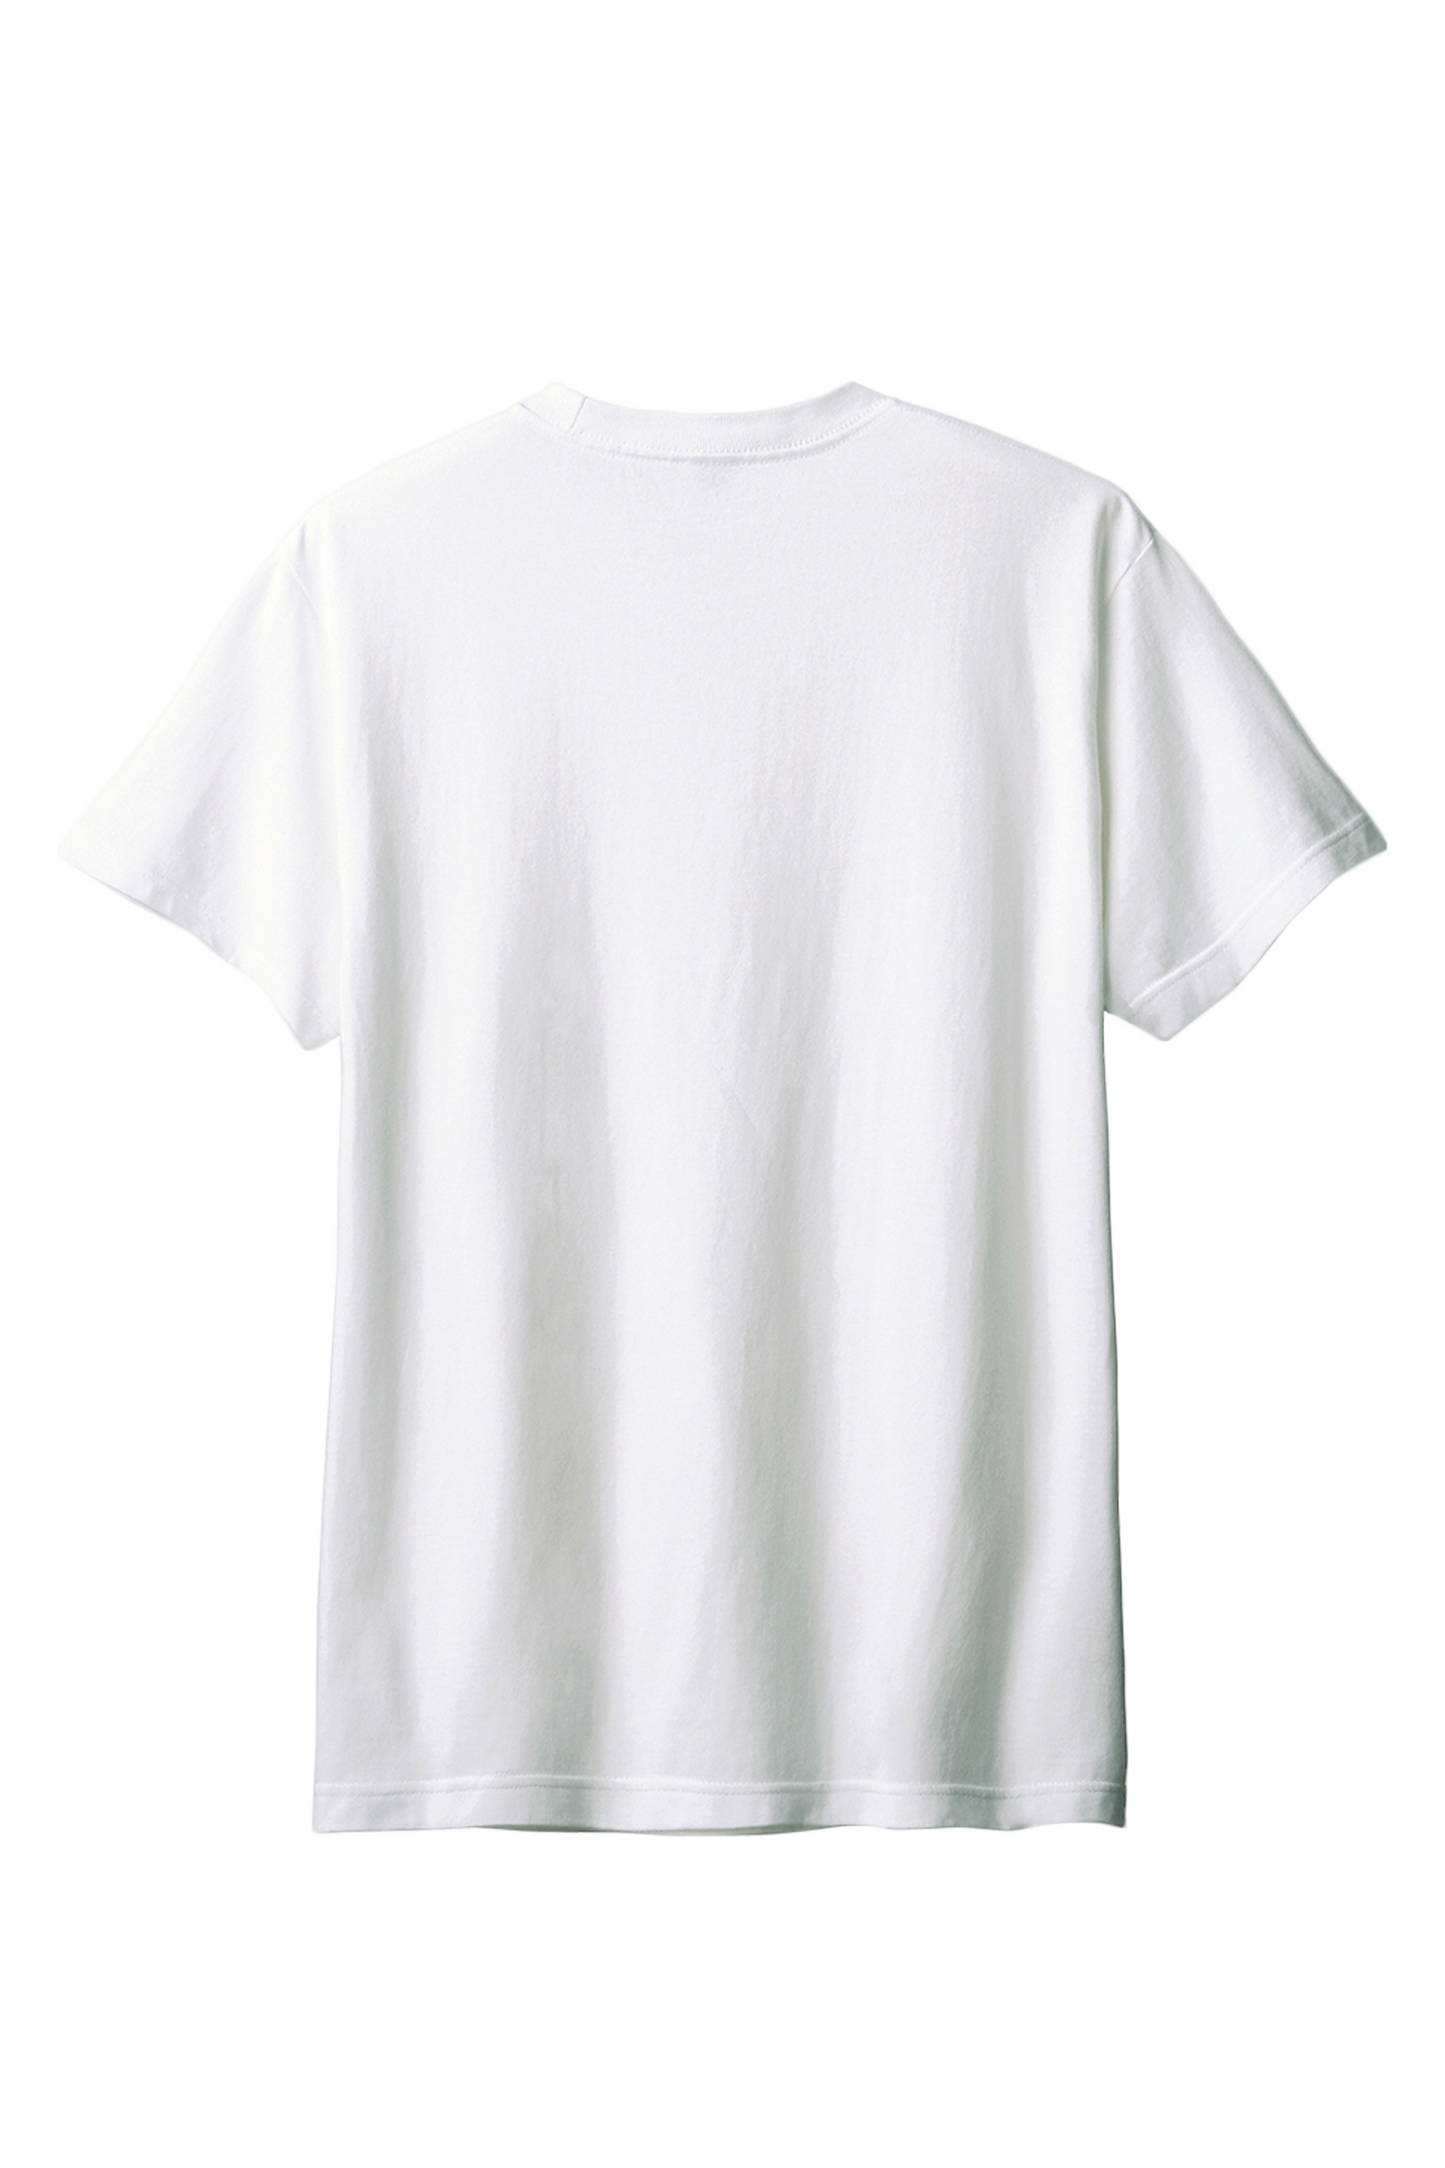 【PORCHESTRA】軽やかなカラフルラインが胸元を彩る！/カラフルタイルTシャツ -Colorful Tile Tee/cotton 100%/size:XS-XXL